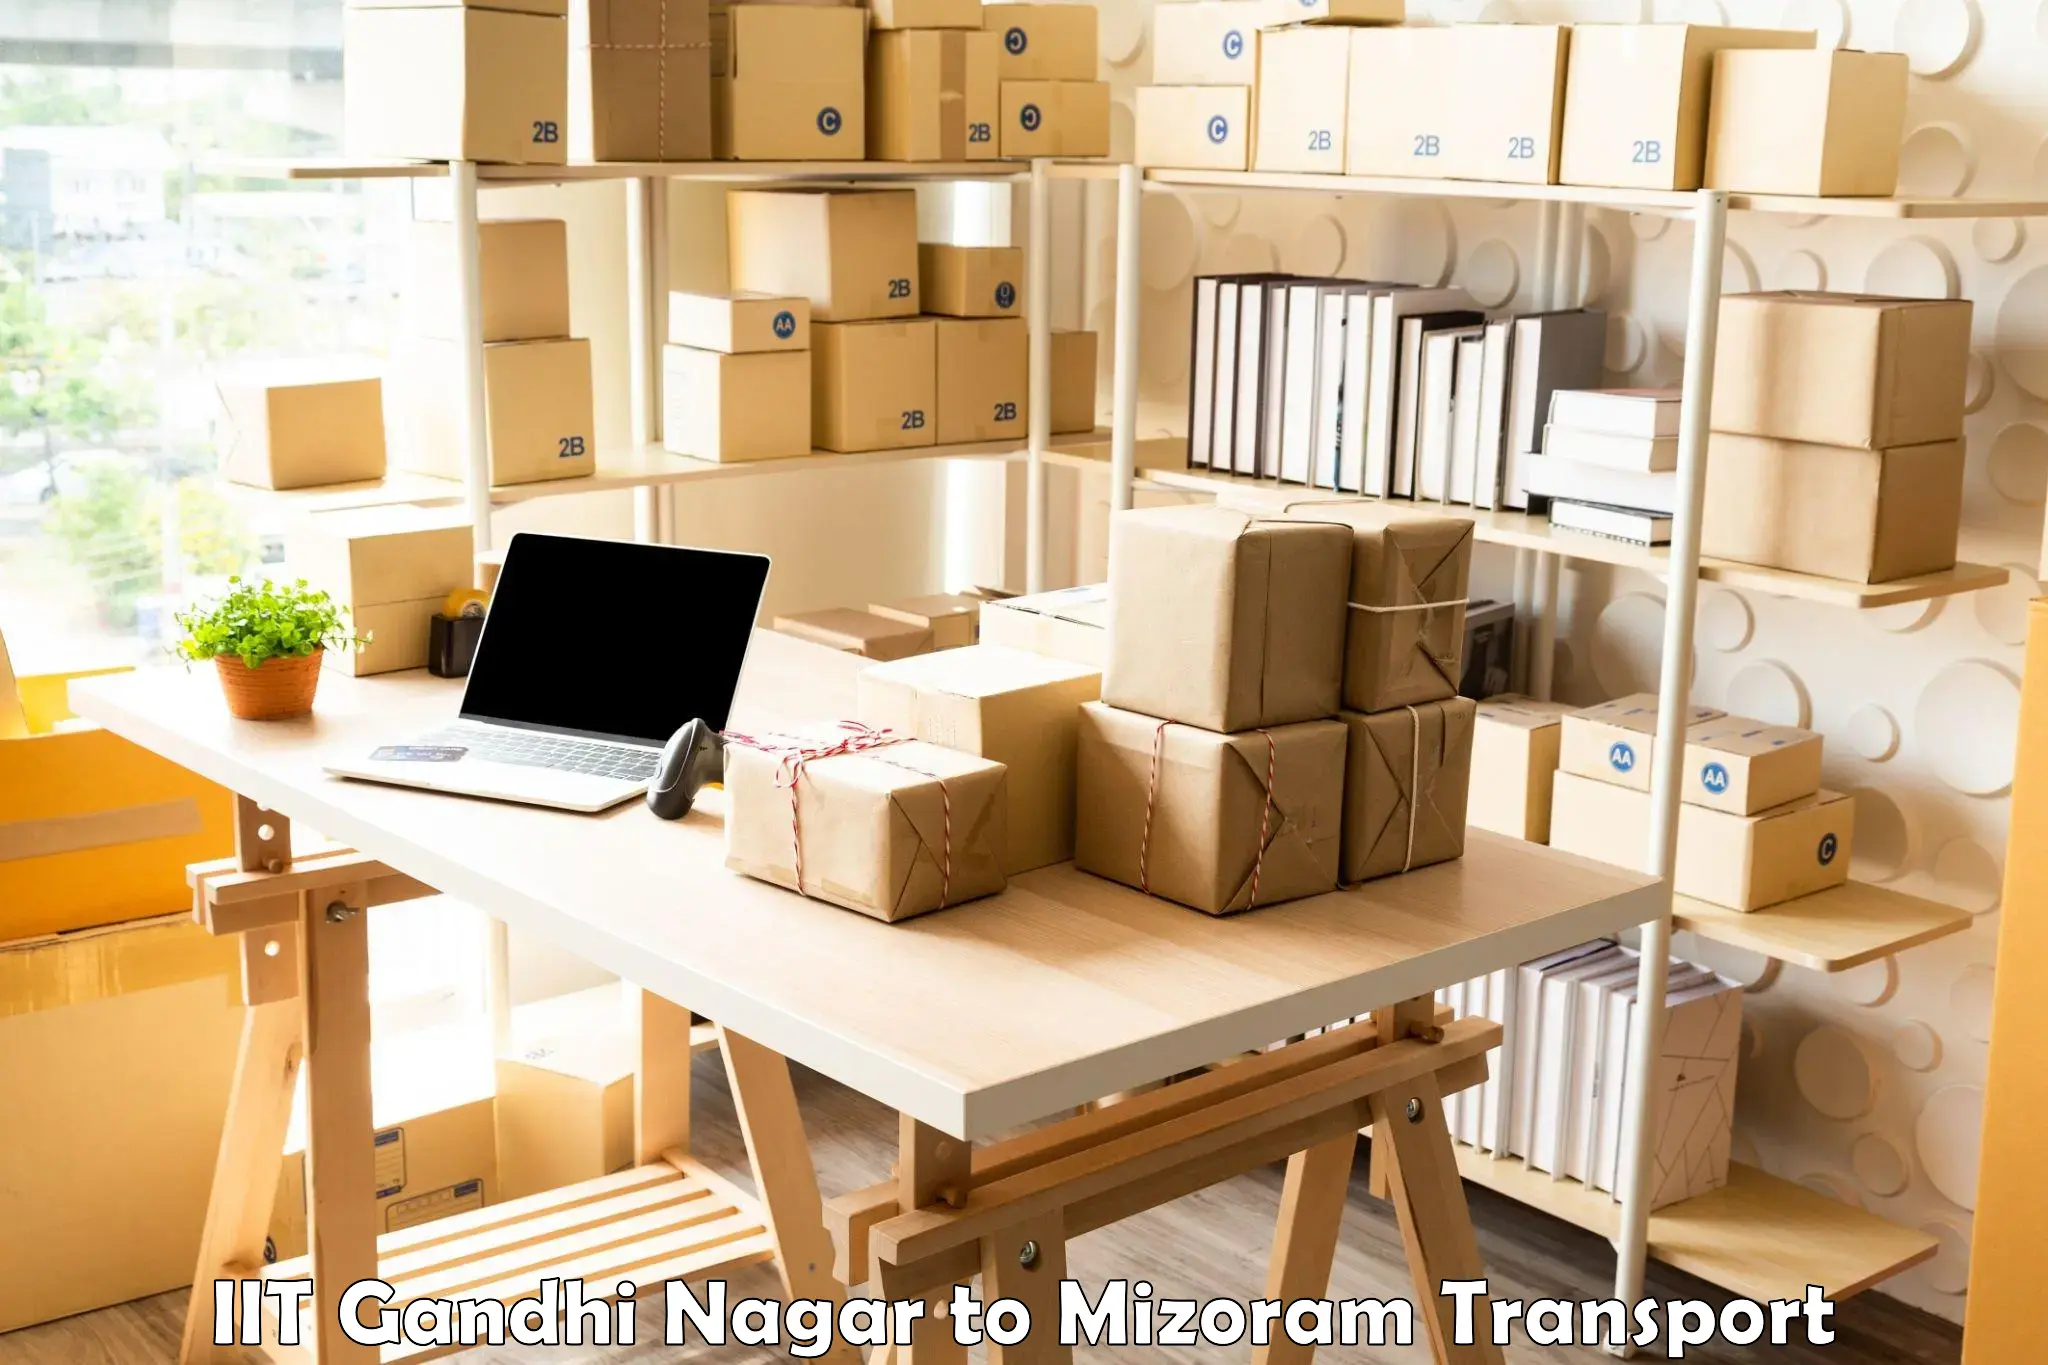 Daily parcel service transport IIT Gandhi Nagar to Mizoram